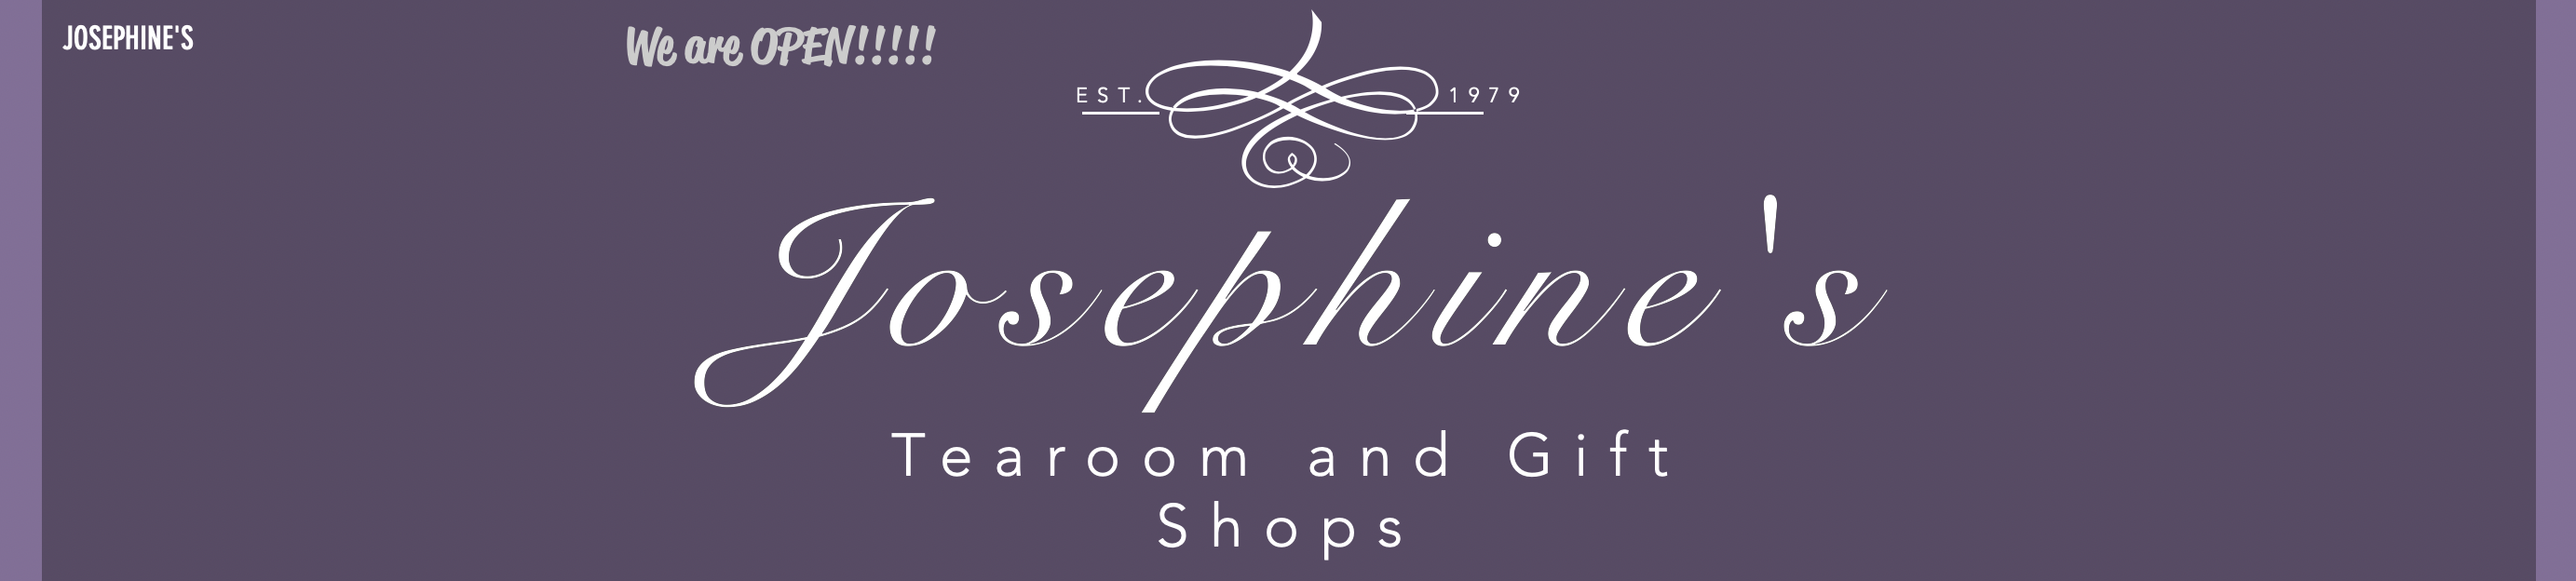 Josephine’s Tea Room and Gift Shop